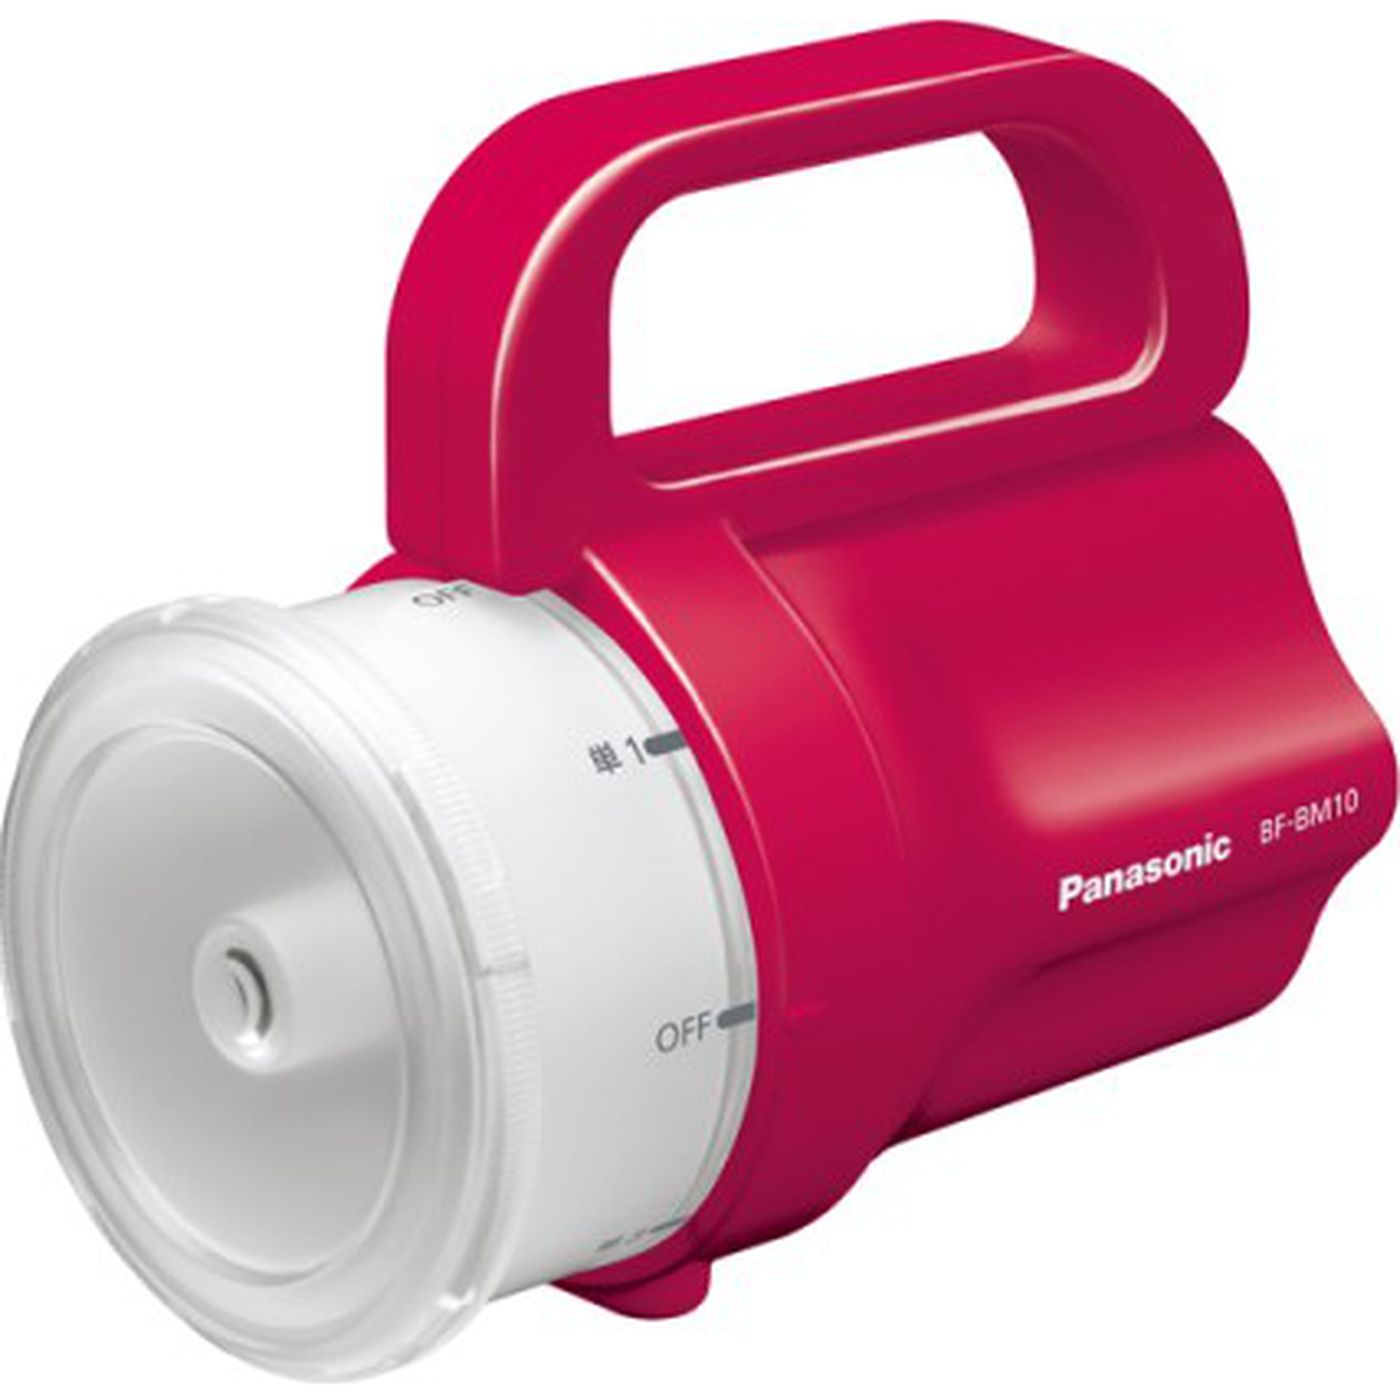 Panasonic Japan Any Battery Light Fit all batteries emergency white BF-BM10-W FS 